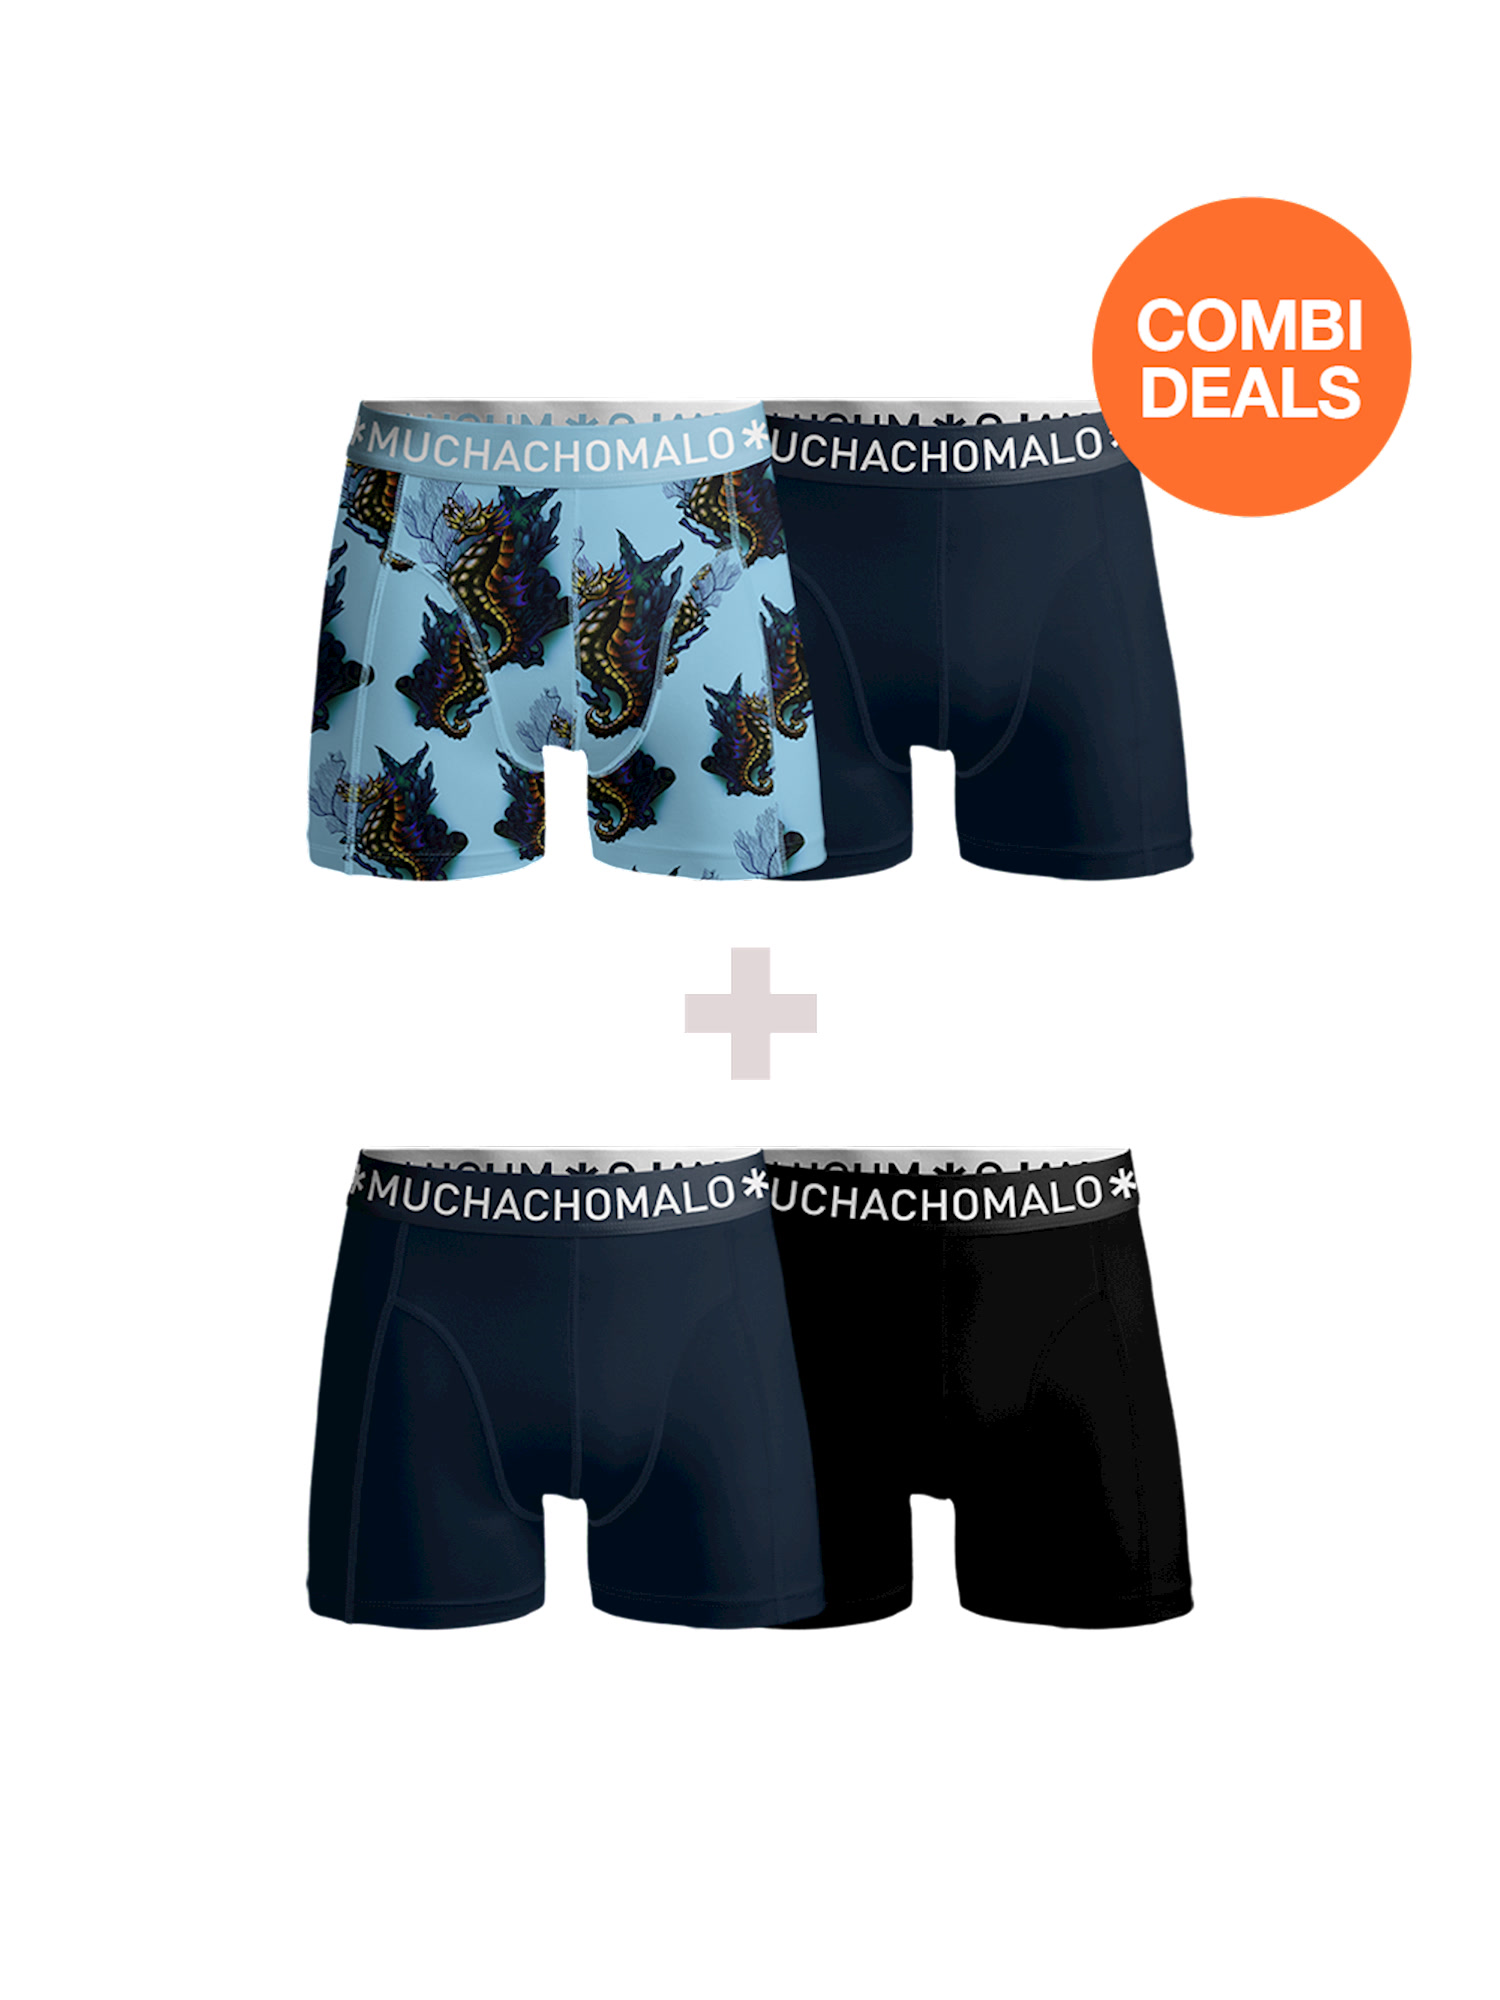 Боксеры Muchachomalo 2er-Set: Boxershorts, цвет Multicolor/Blue/Black/Blue боксеры muchachomalo 2er set boxershorts цвет blue blue